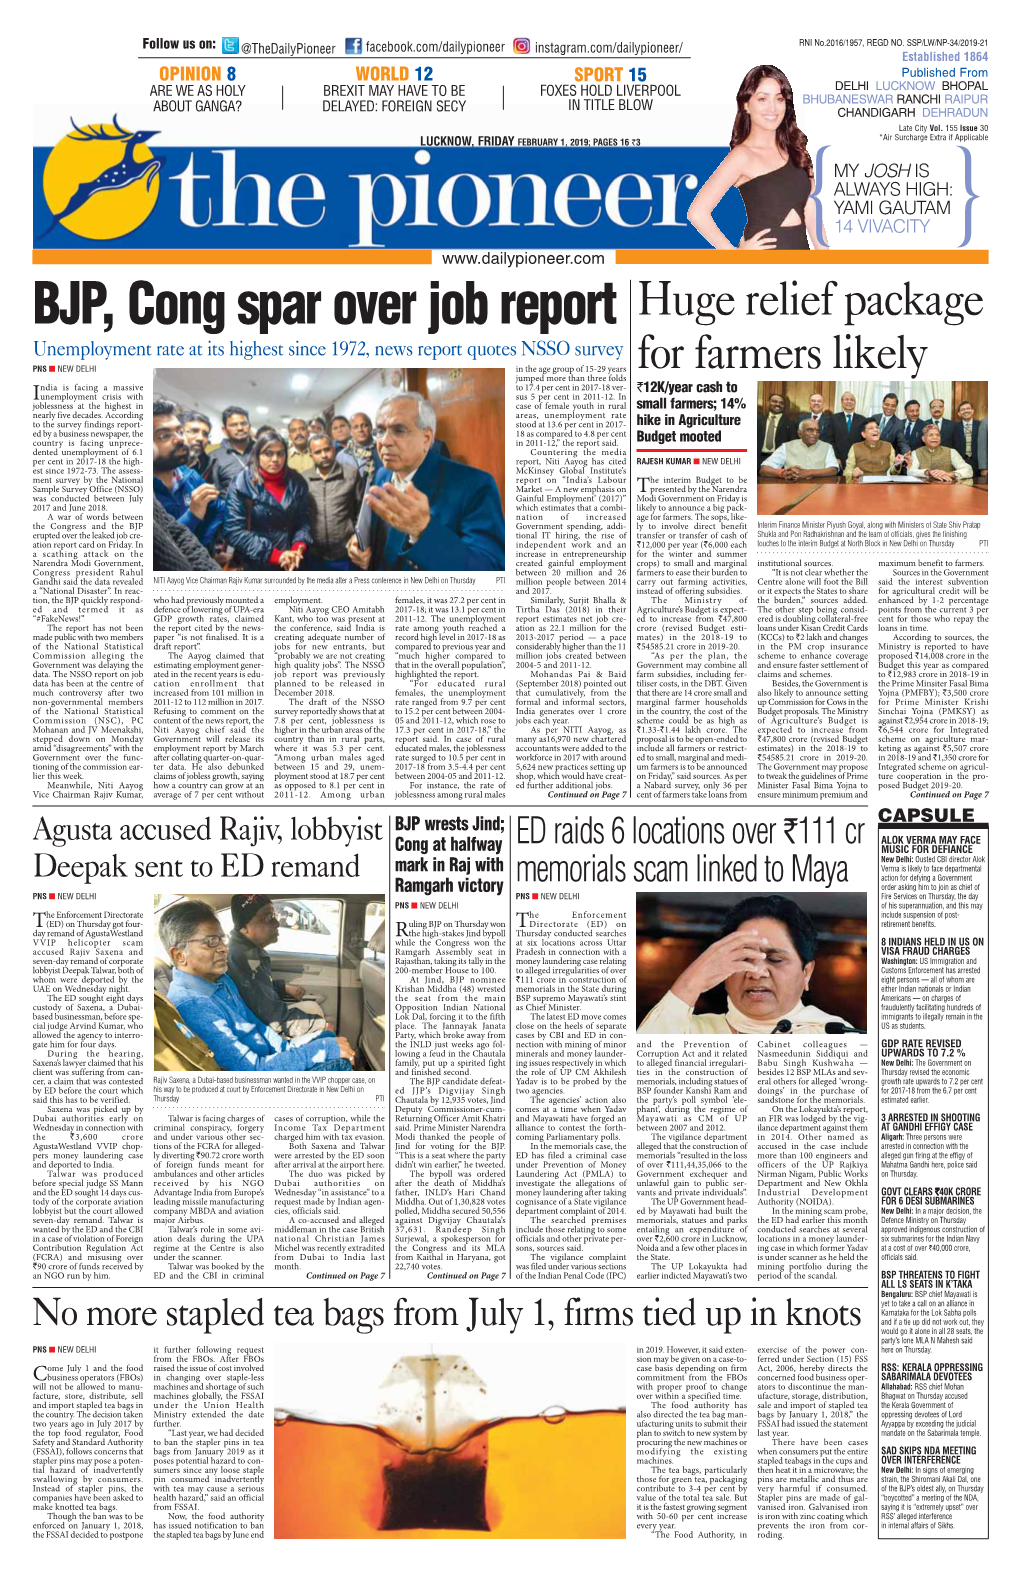 BJP, Cong Spar Over Job Report